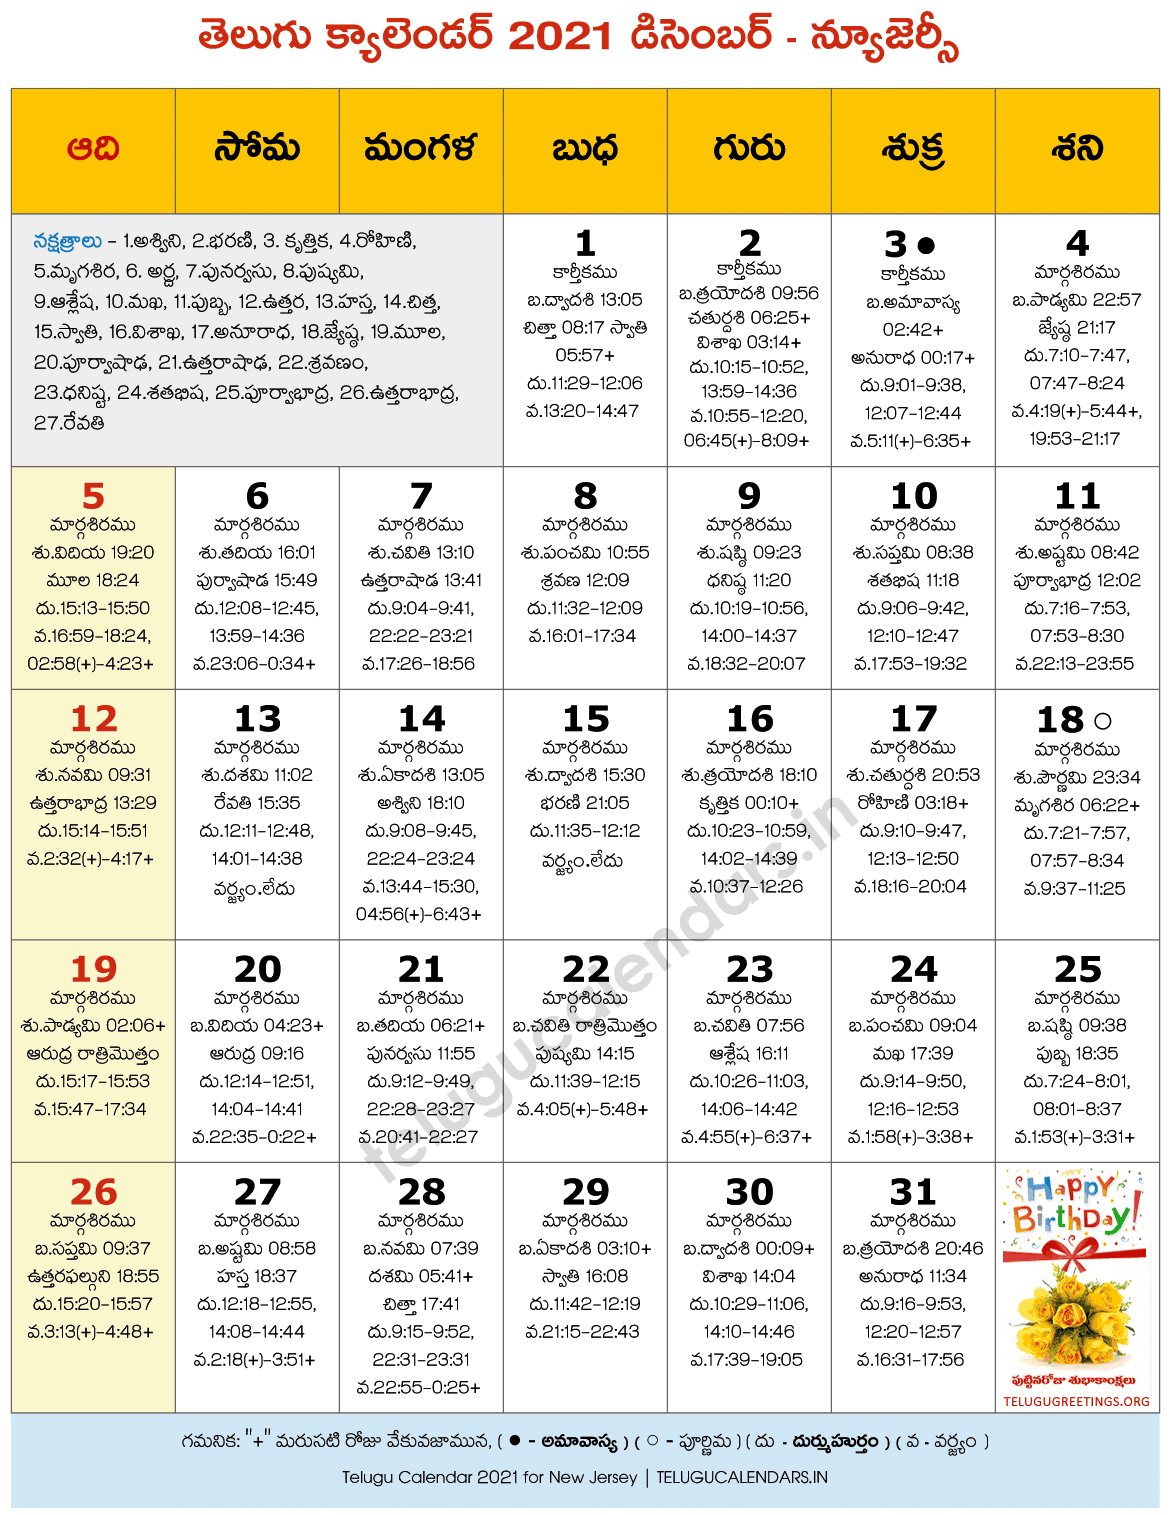 Telugu Calendar 2022 Nj - February Calendar 2022